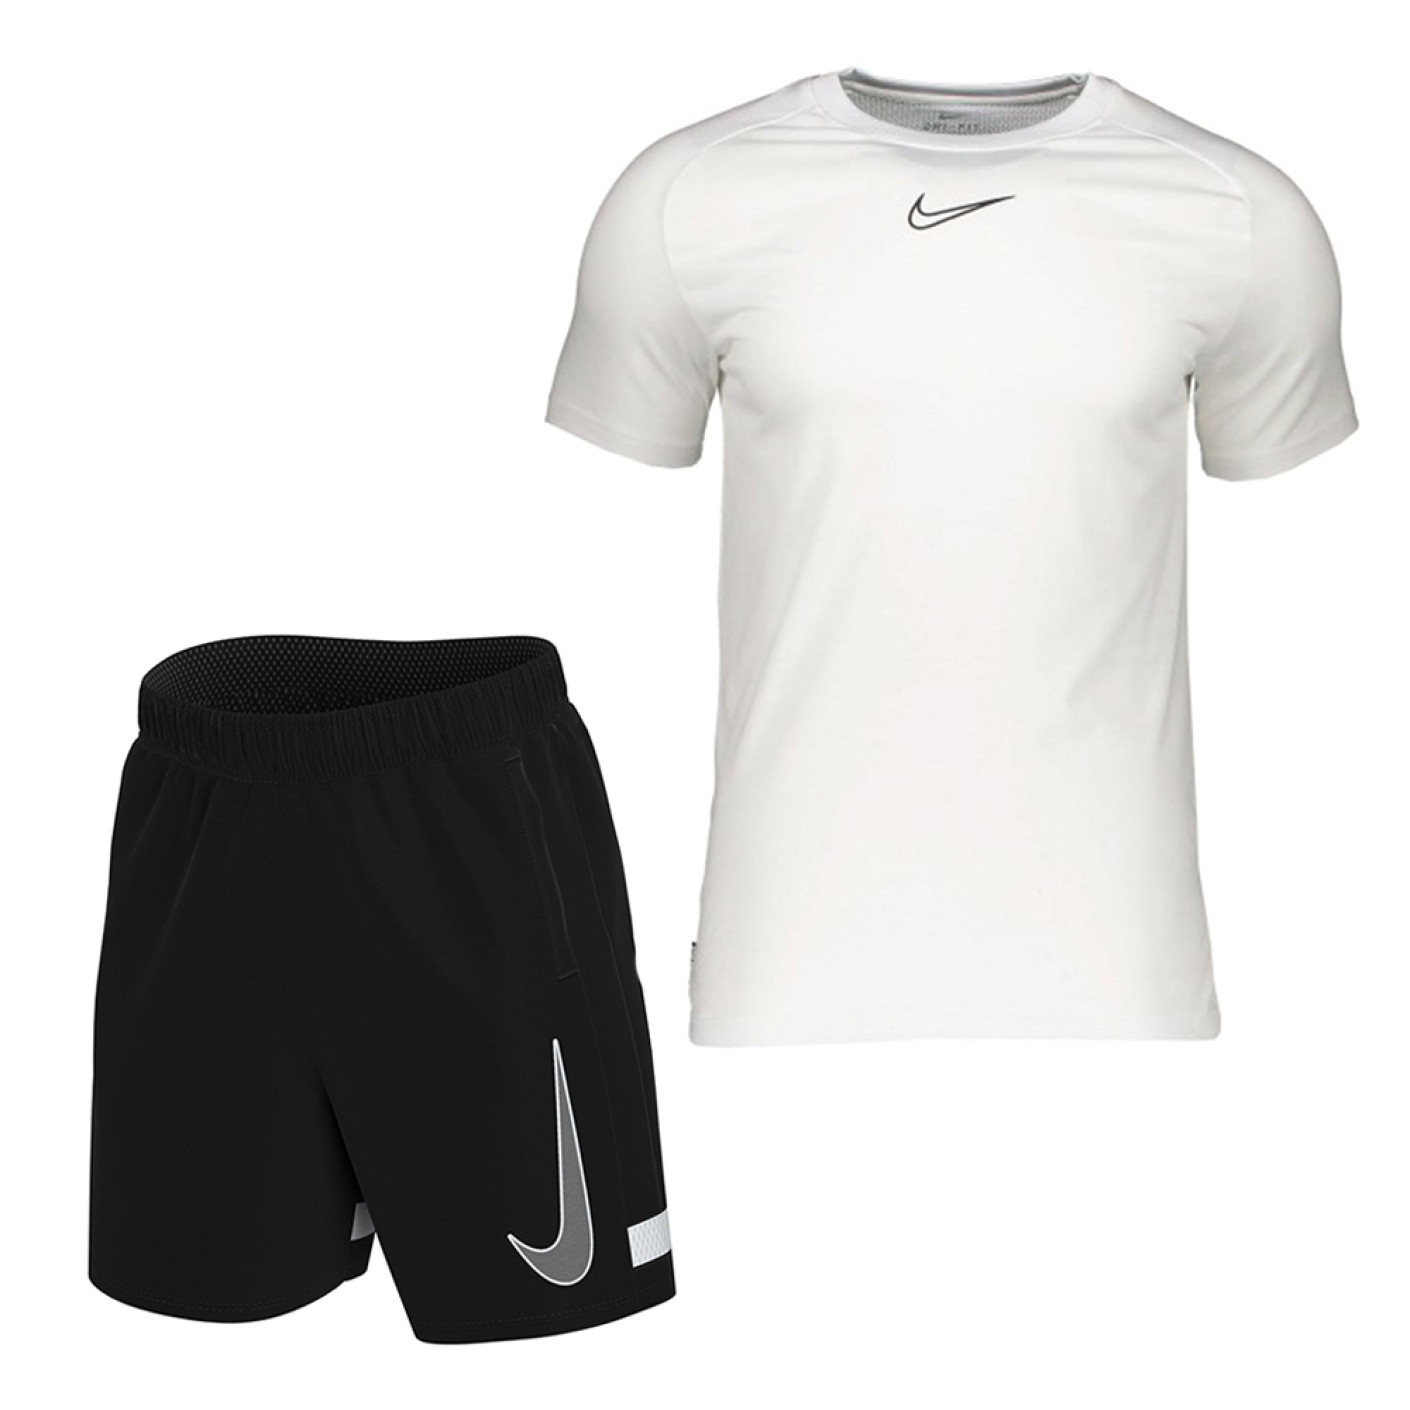 Ensemble d'entraînement Nike Dry Academy Blanc Noir